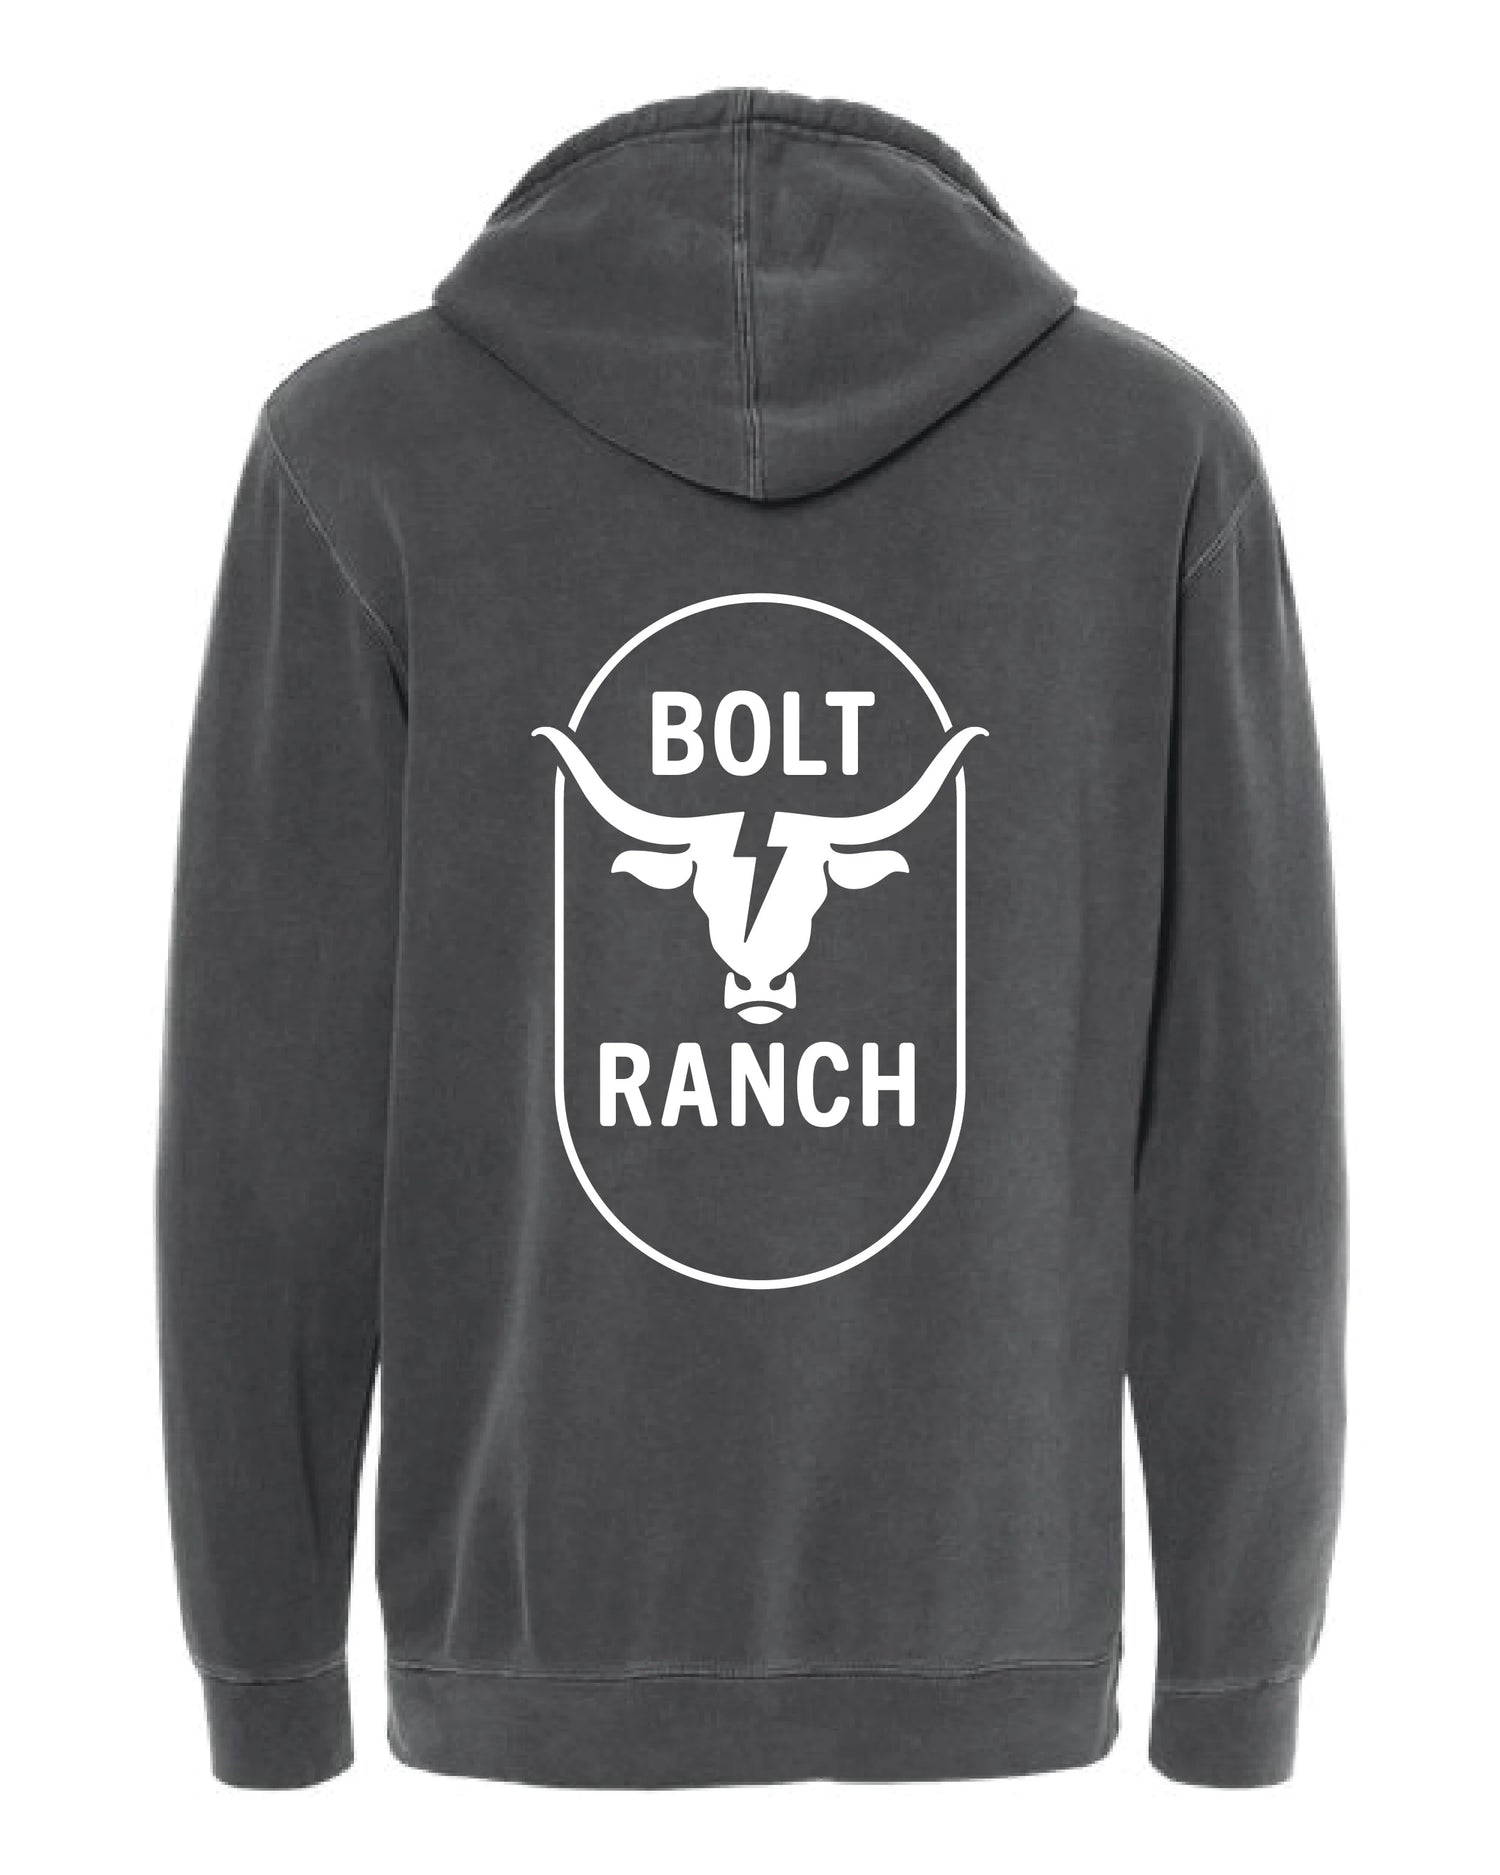 Bolt Ranch Adult Hoodie - Black